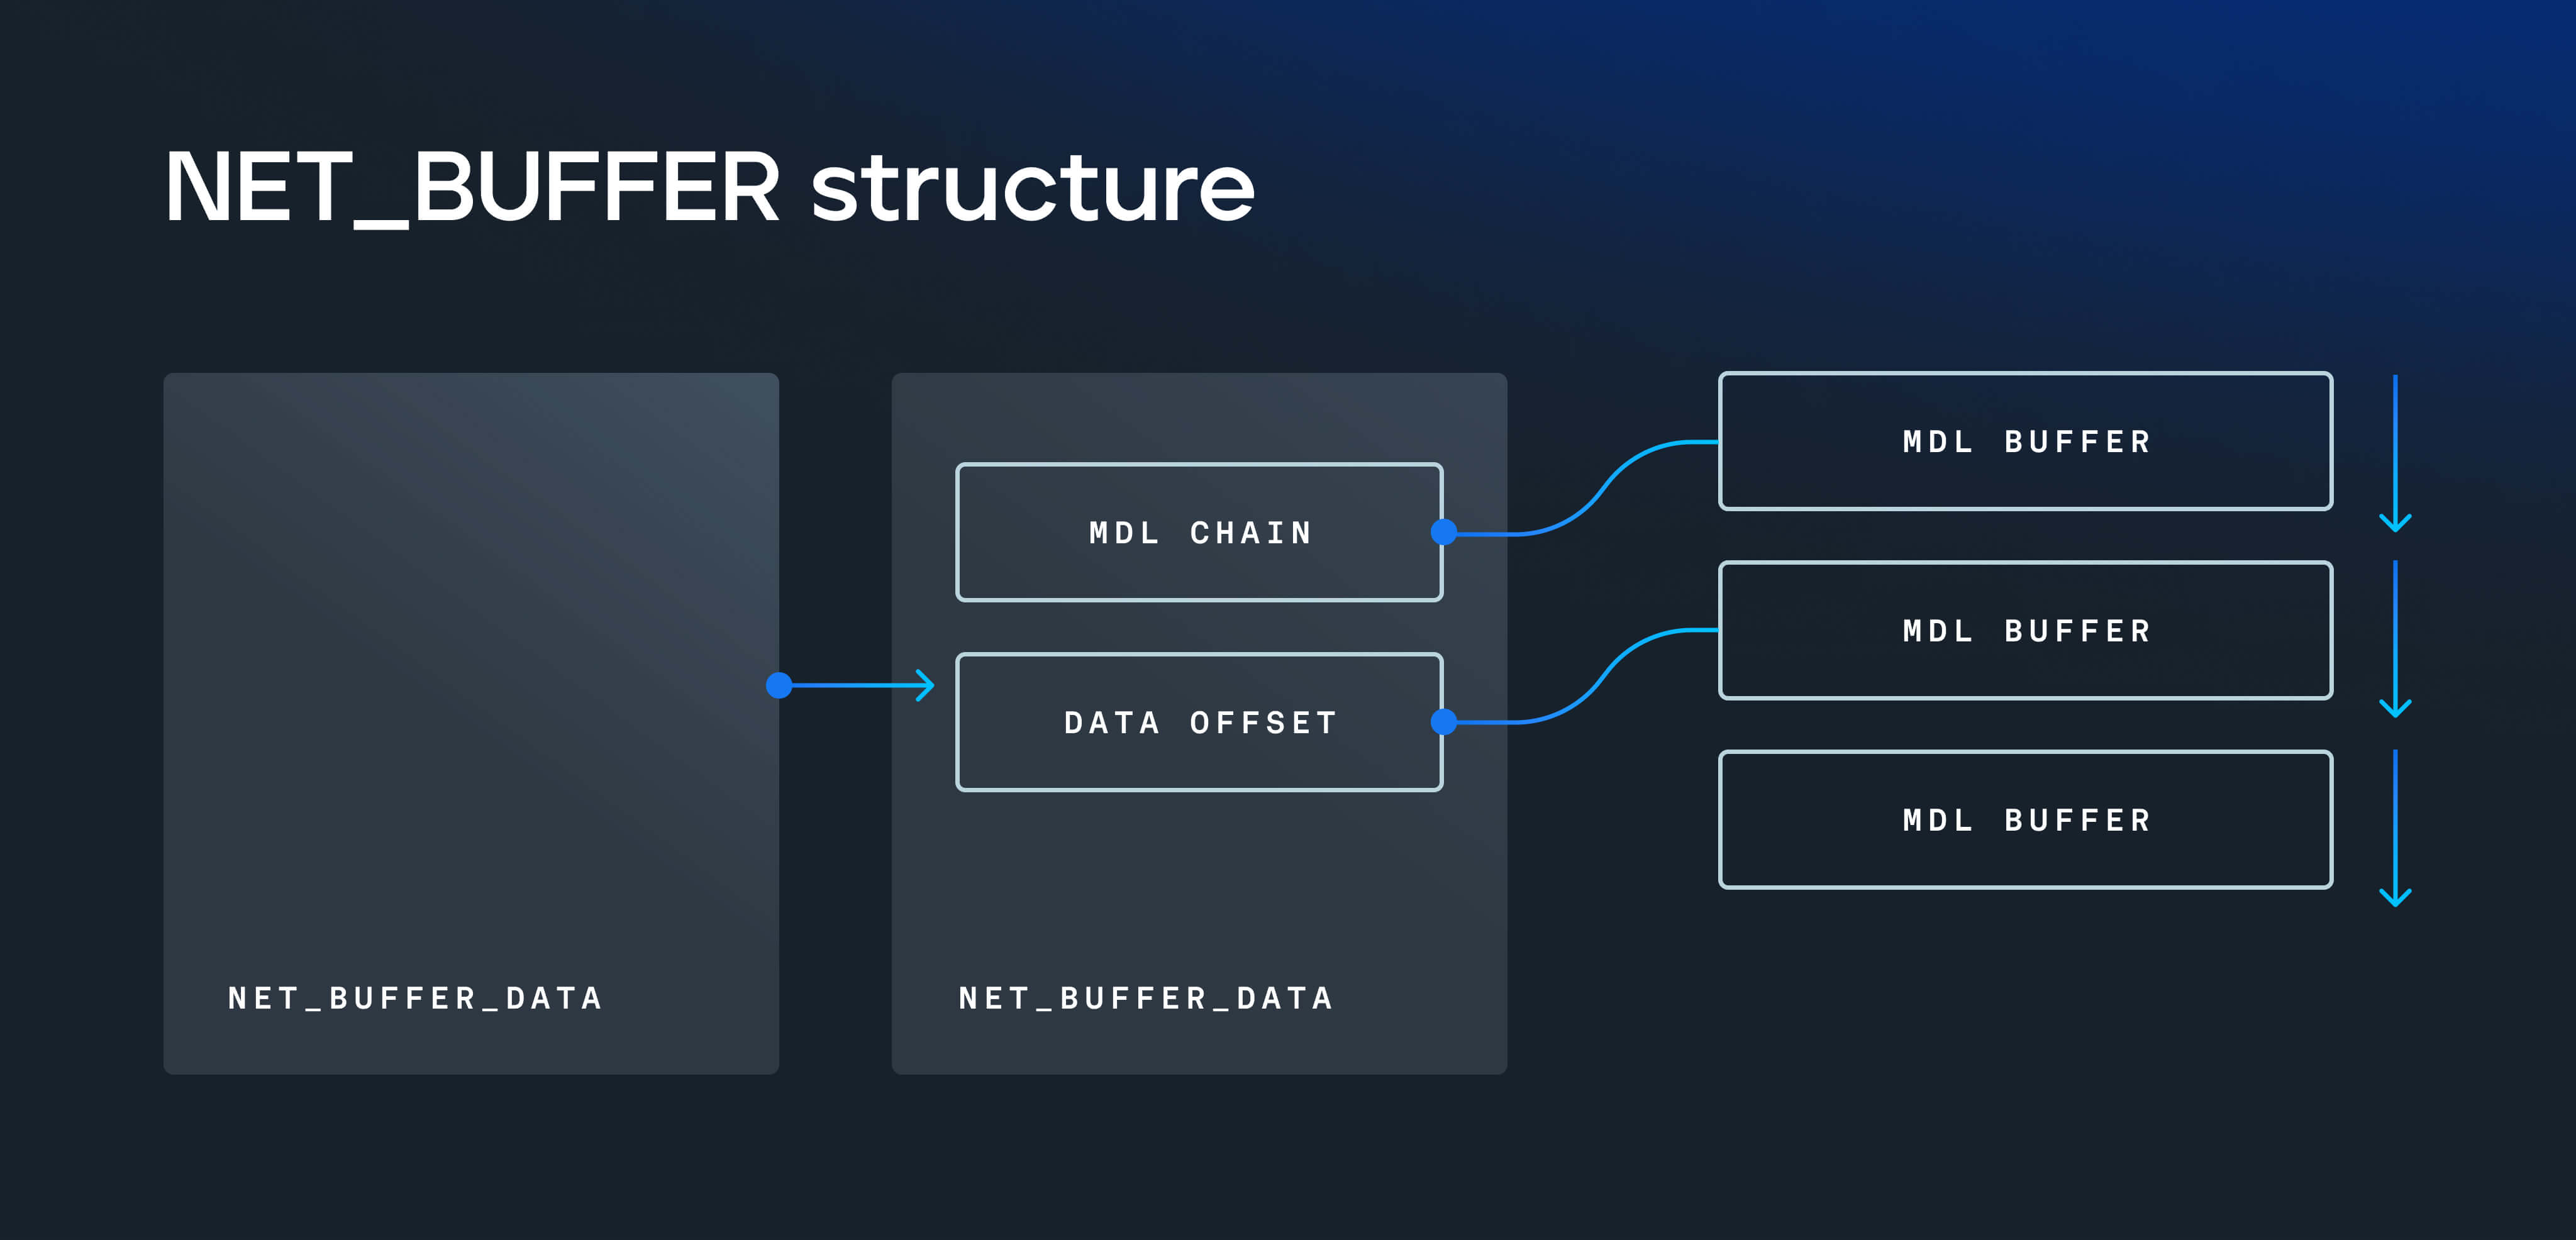 Figure 2: Diagram of NET_BUFFER structure